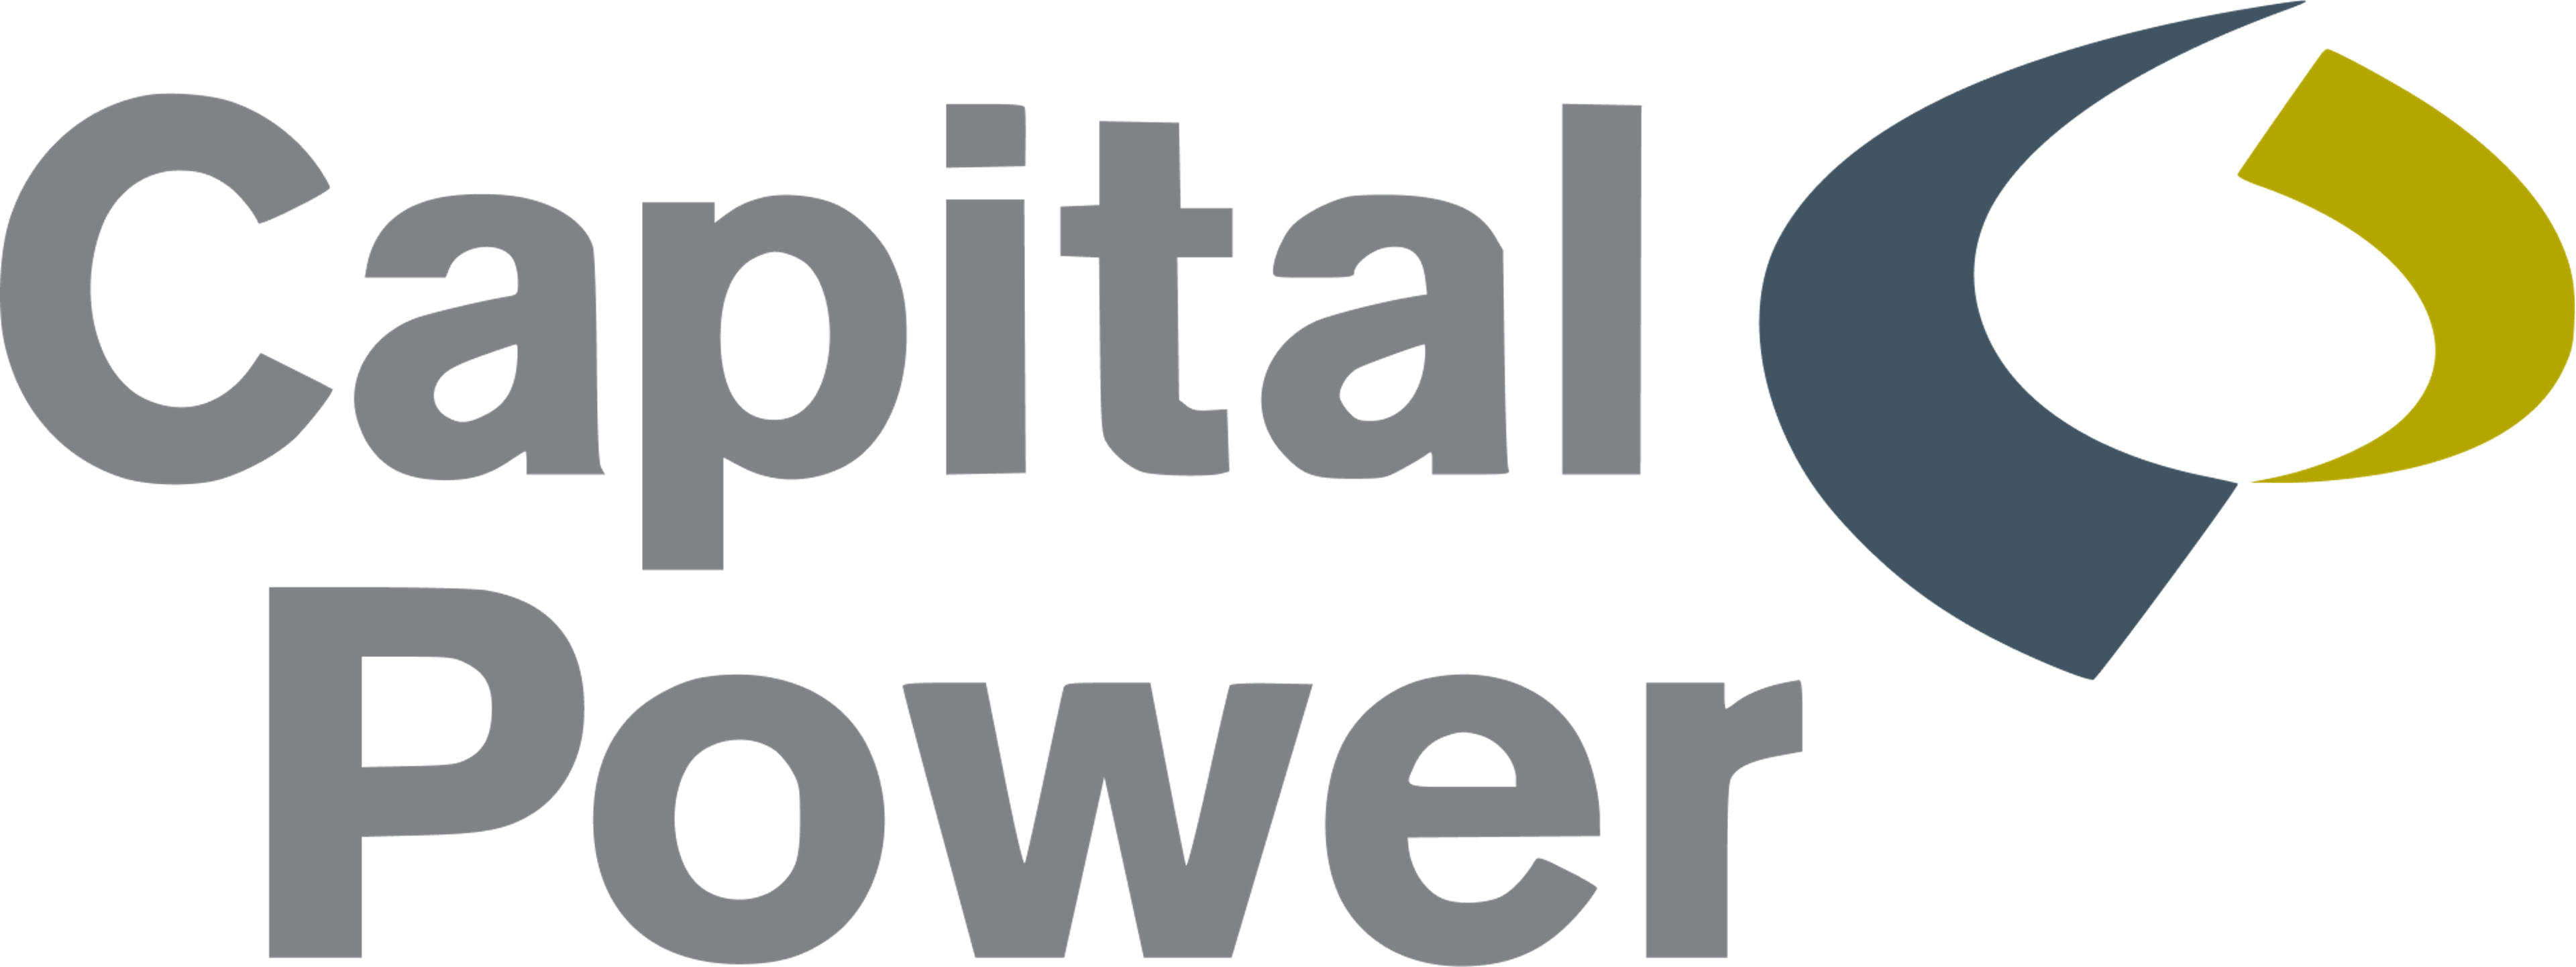 Capital Power logo on transparent background